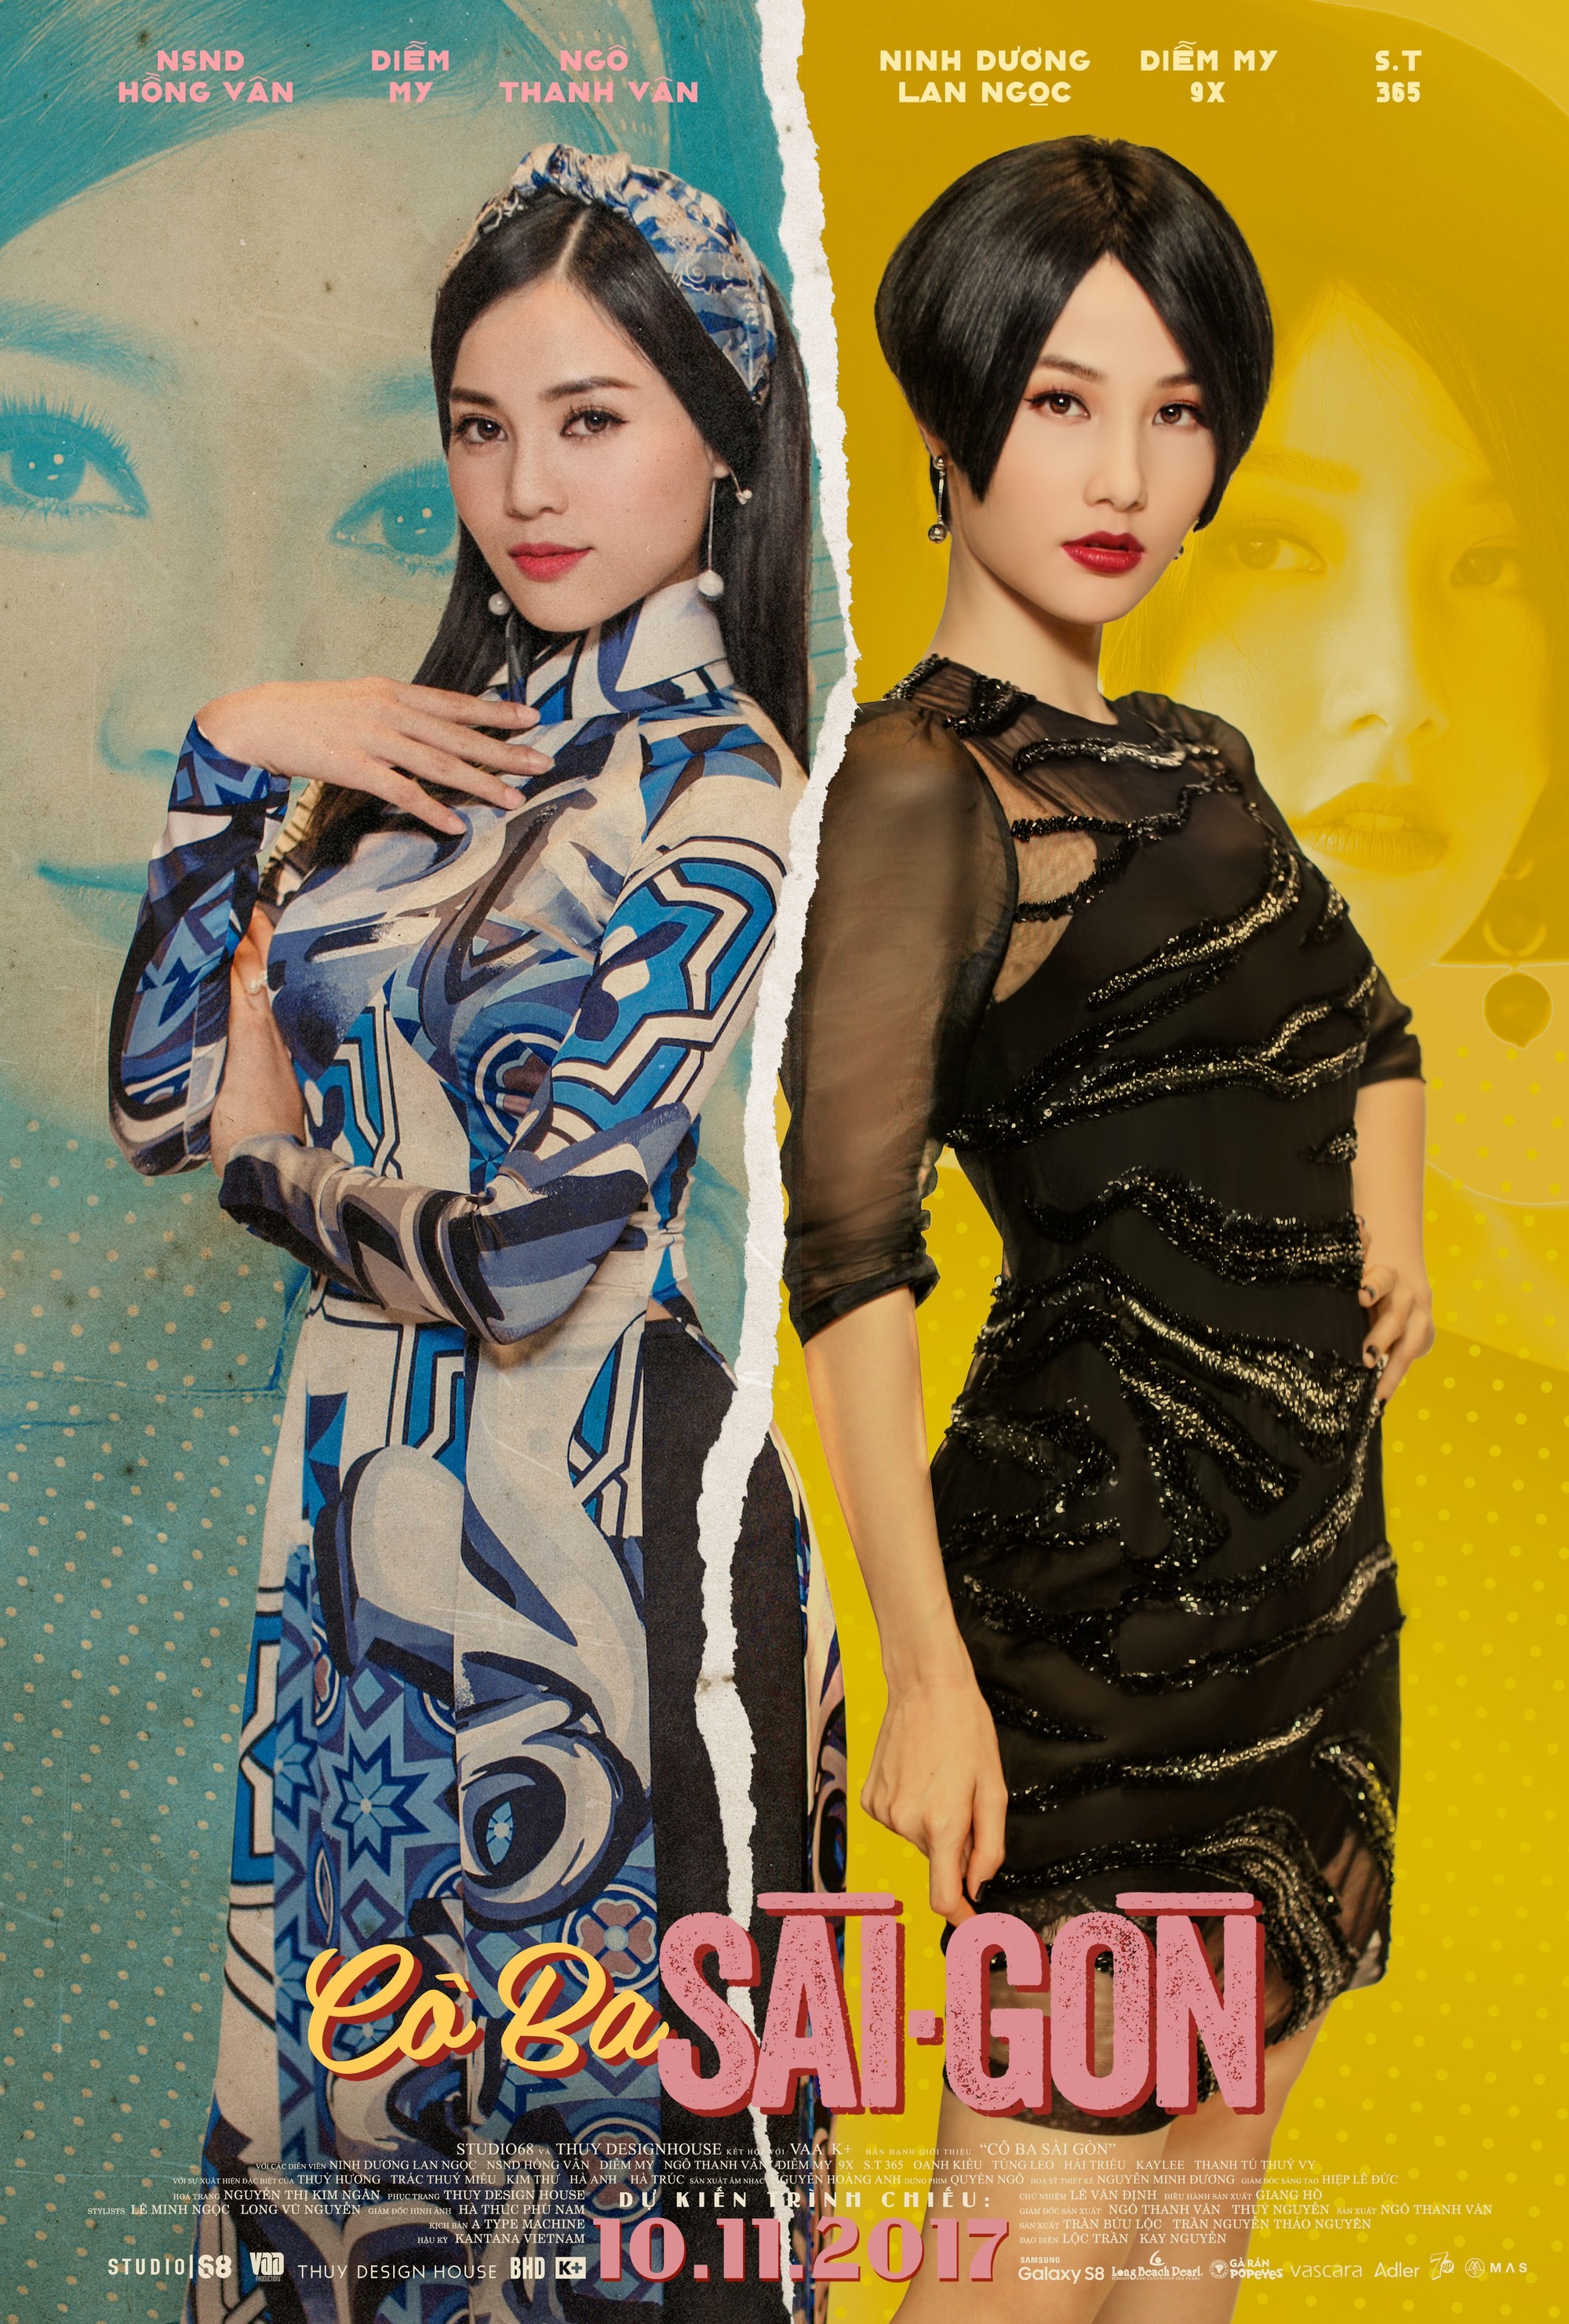 Mega Sized Movie Poster Image for Co Ba Sai Gon (#3 of 7)